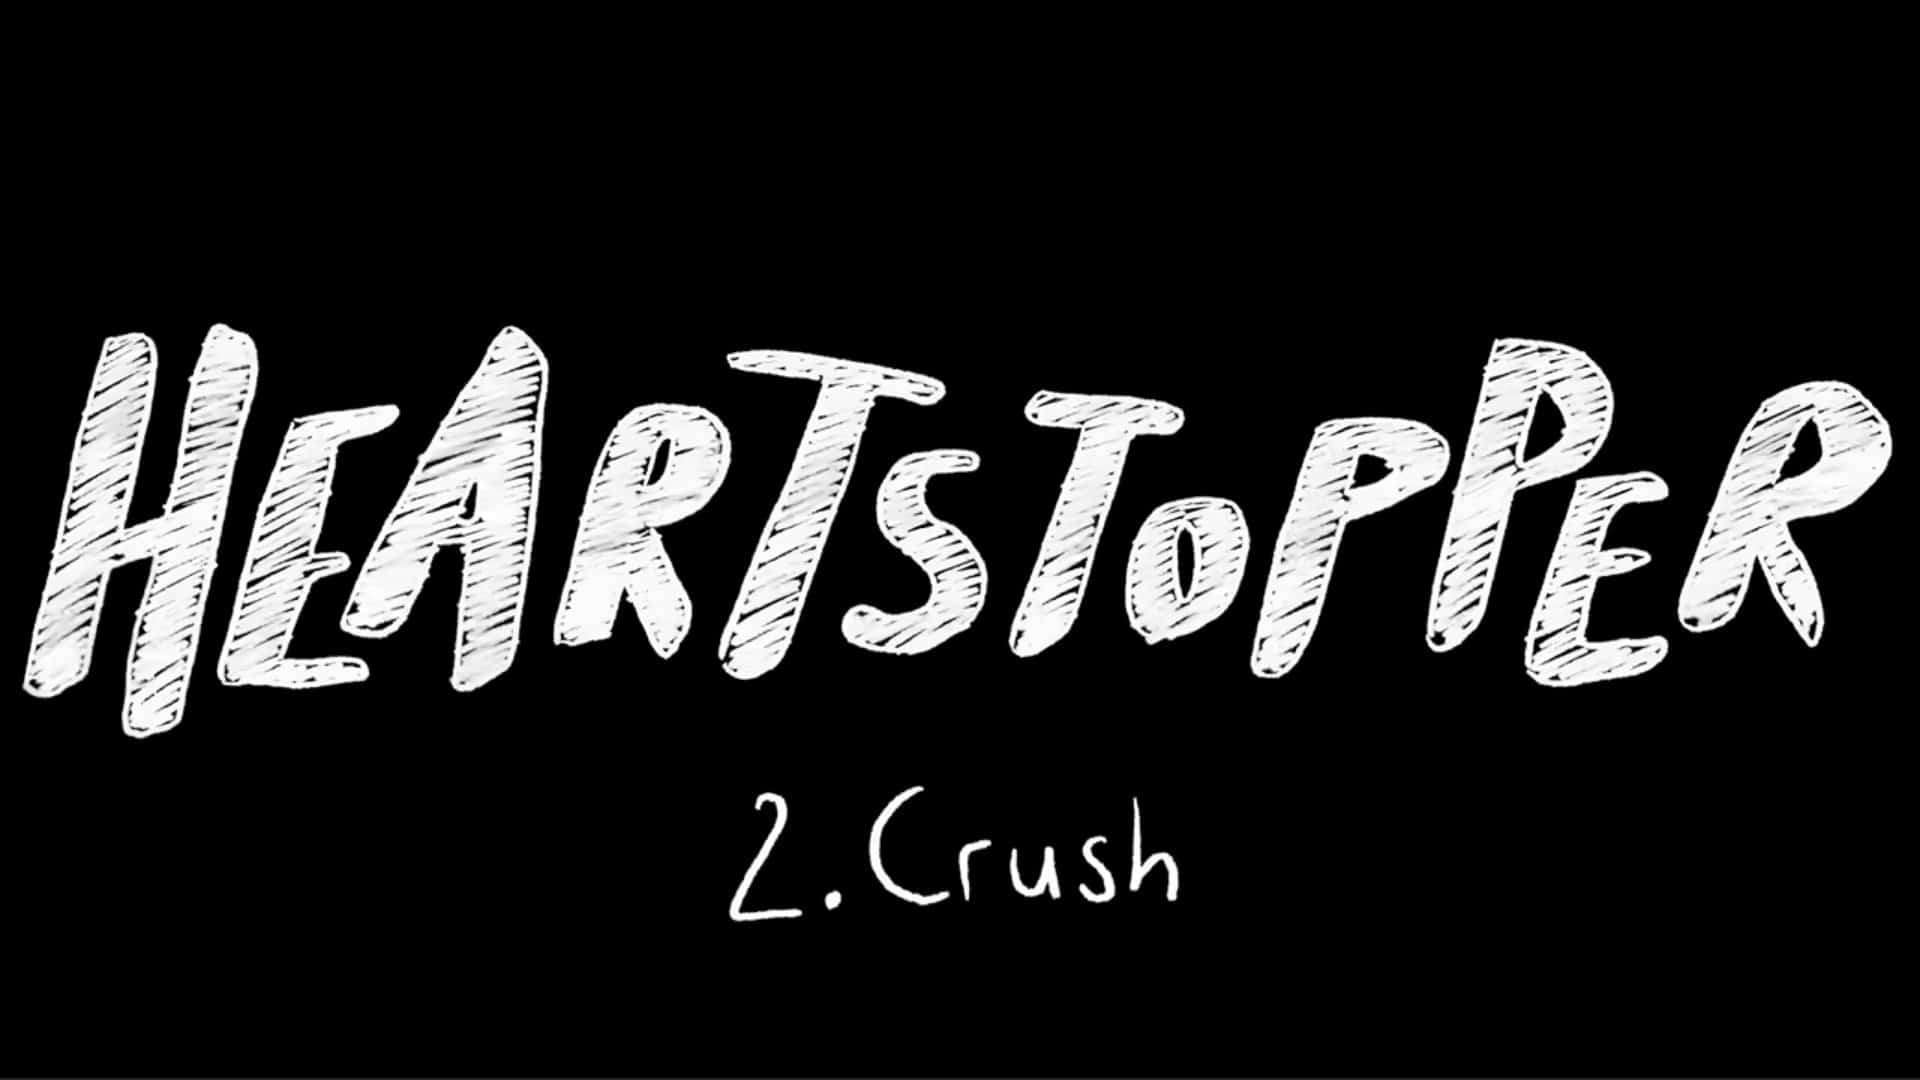 Title Card - Heartstopper Season 1 Episode 2 “Crush”